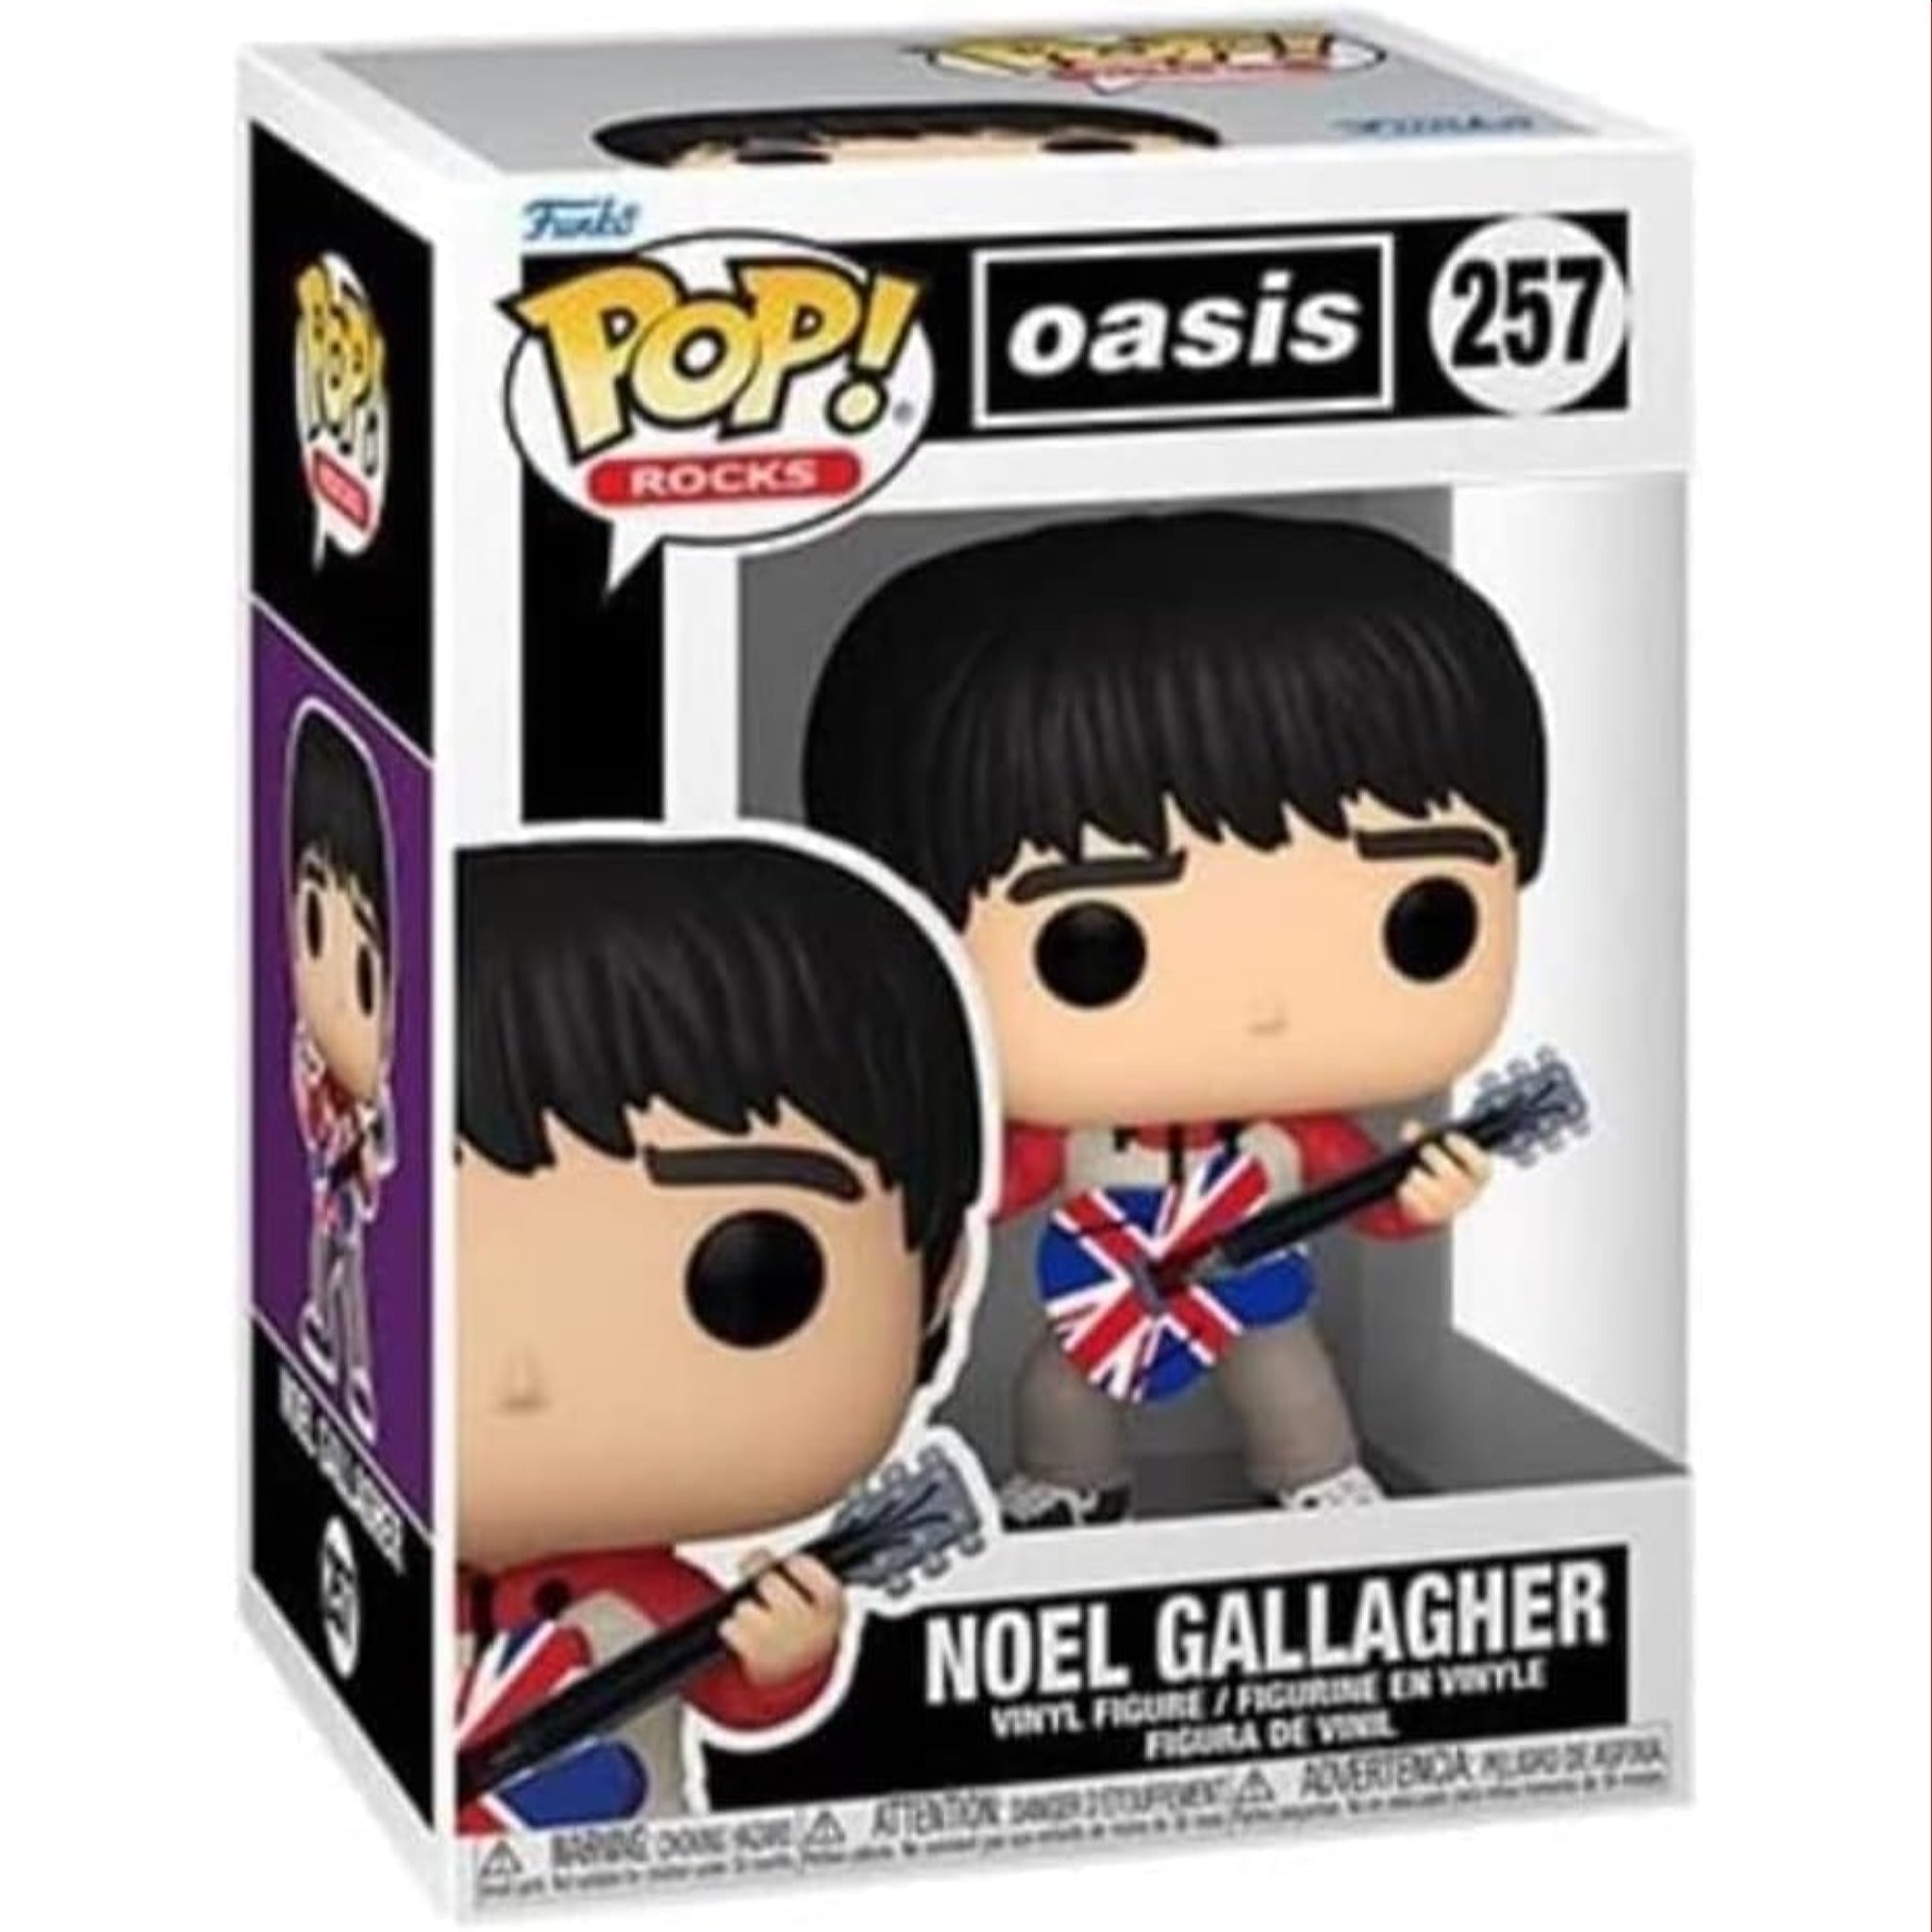 Noel Gallagher Oasis Funko Pop! Vinyl DAMAGED BOX